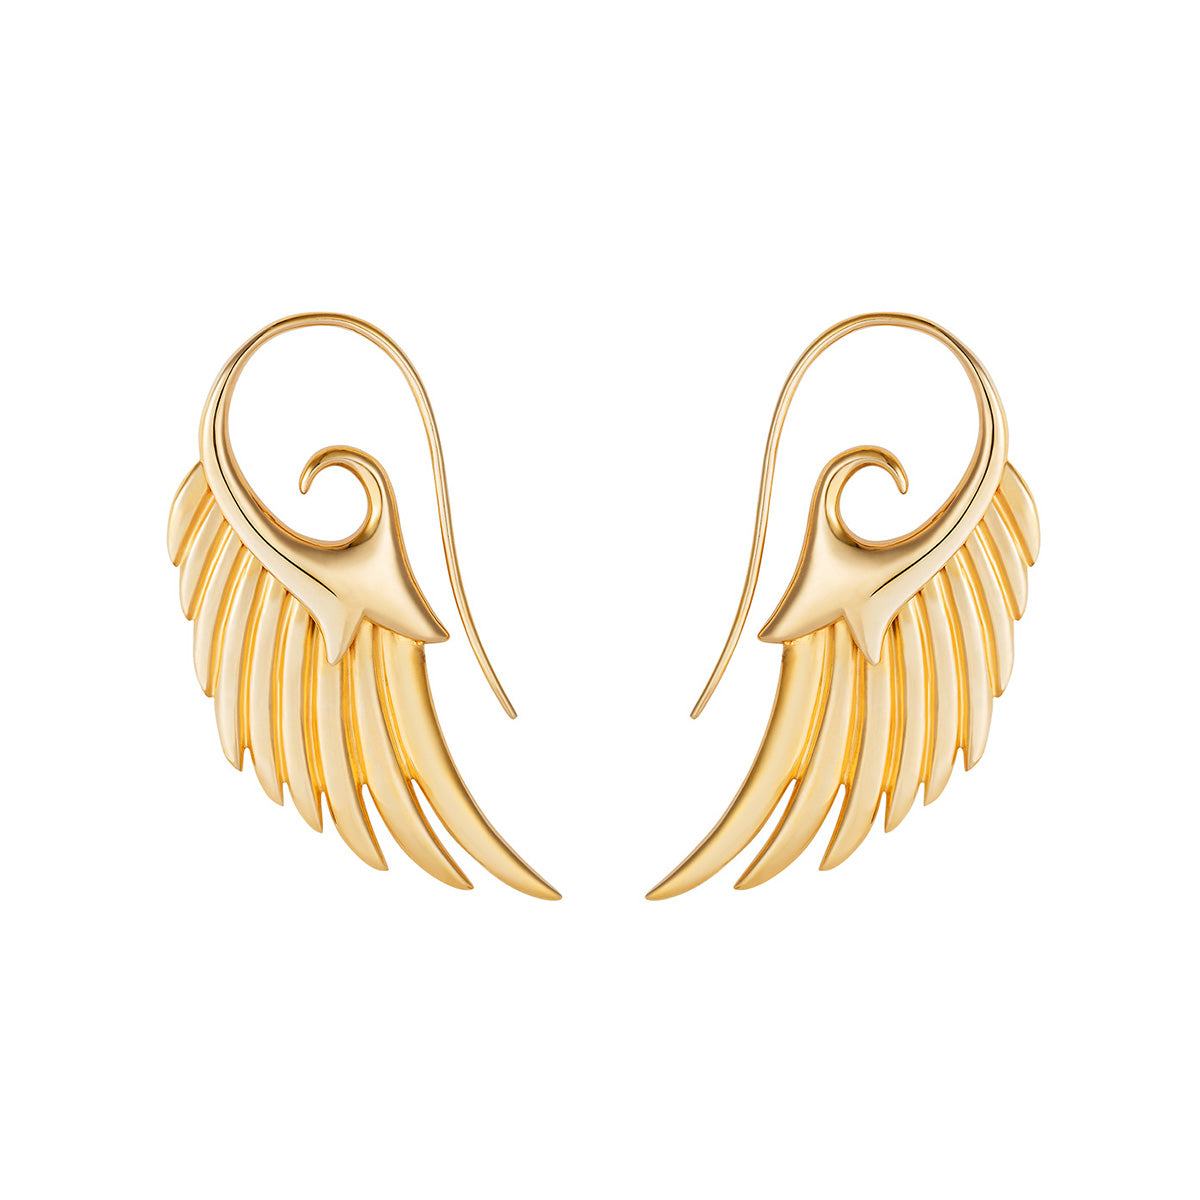 Noor Fares 925 Sterling Silver E-Coated Gold Wings Earrings 